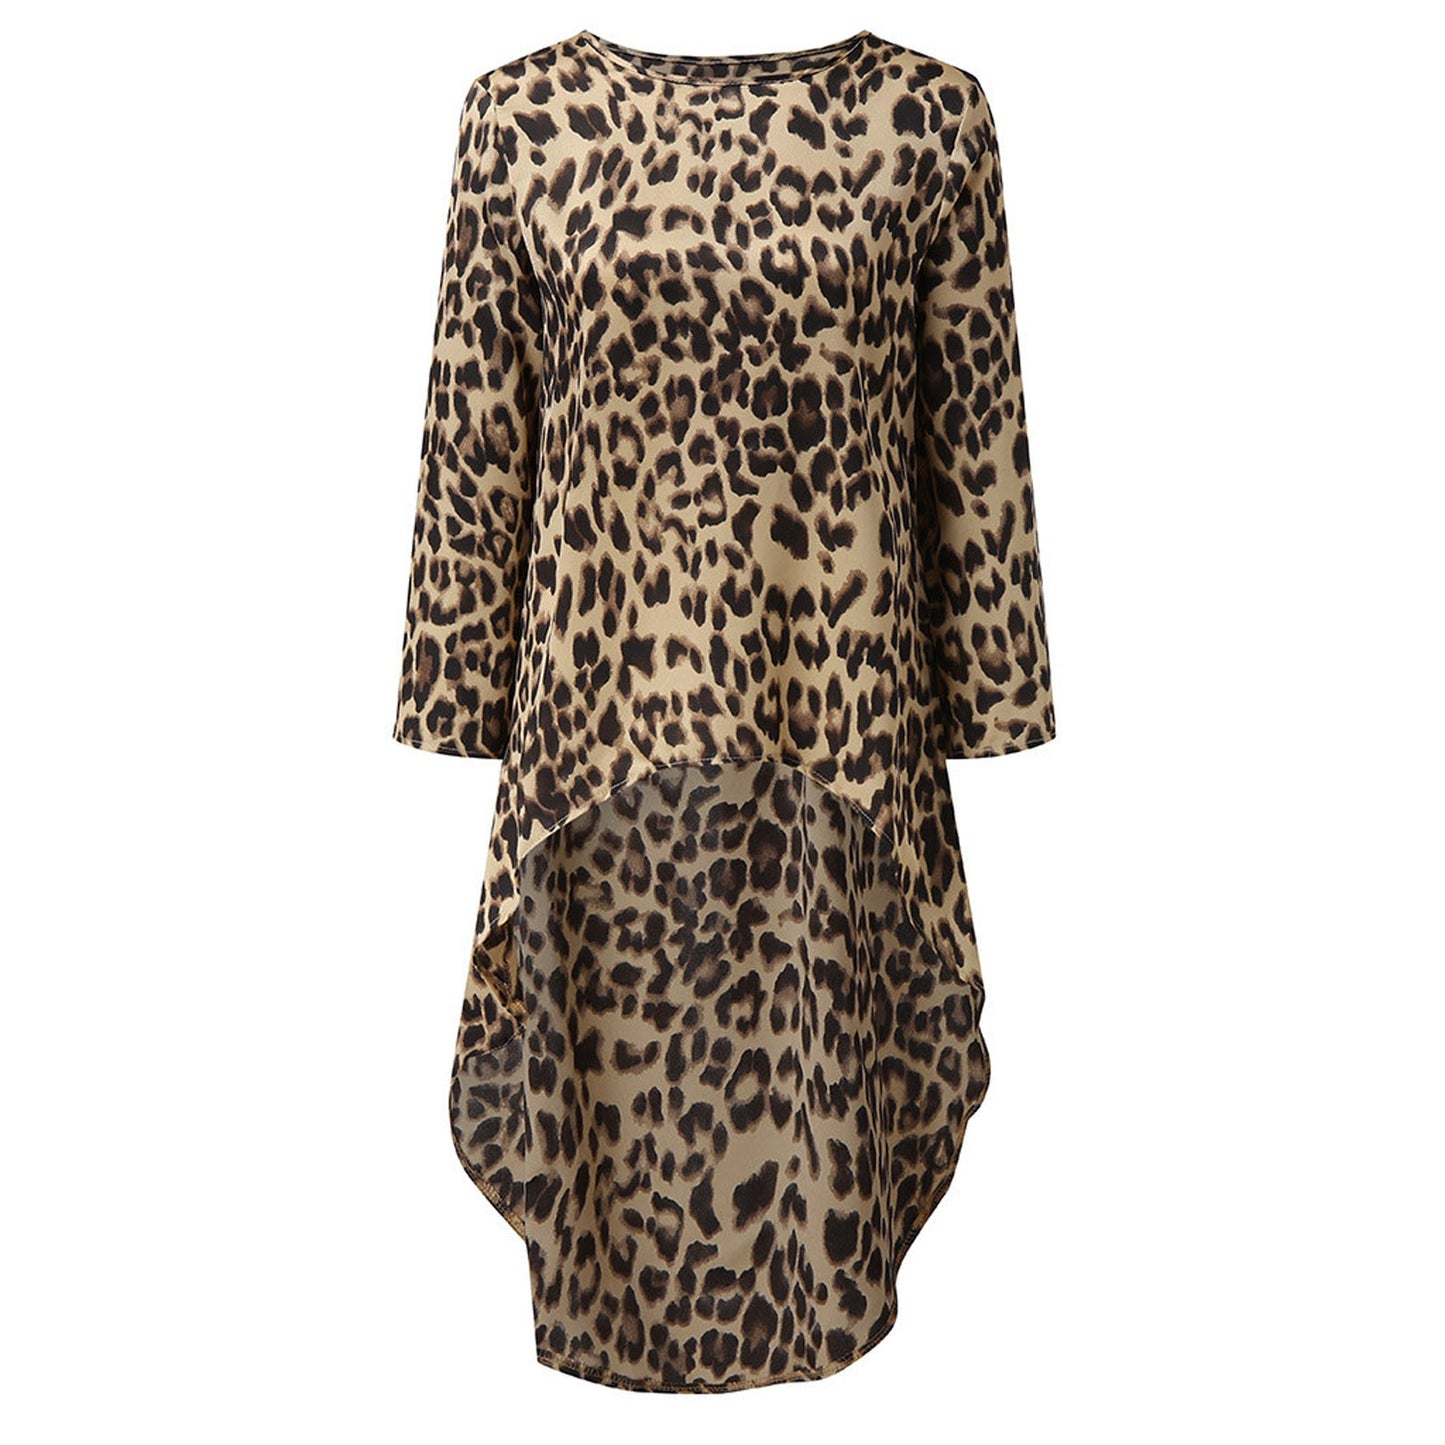 Leopard Long Sleeve Shirt Tops High Low Blouse